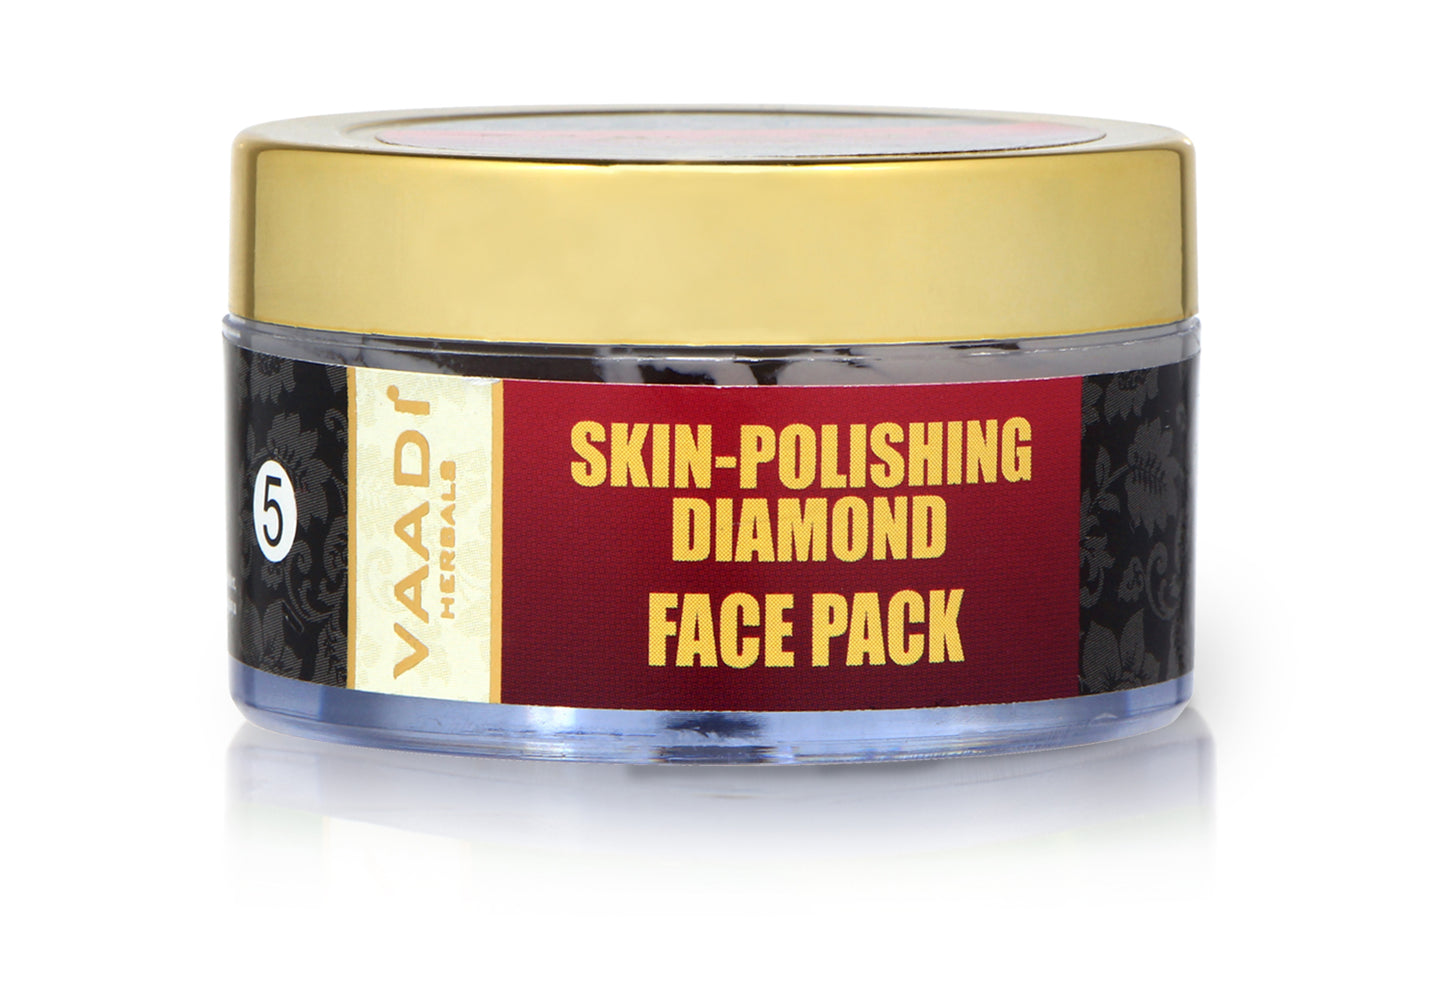 (Expiring Sept. 2024) Vaadi Herbals Organic Skin-Polishing Diamond Face Pack, 70 gm